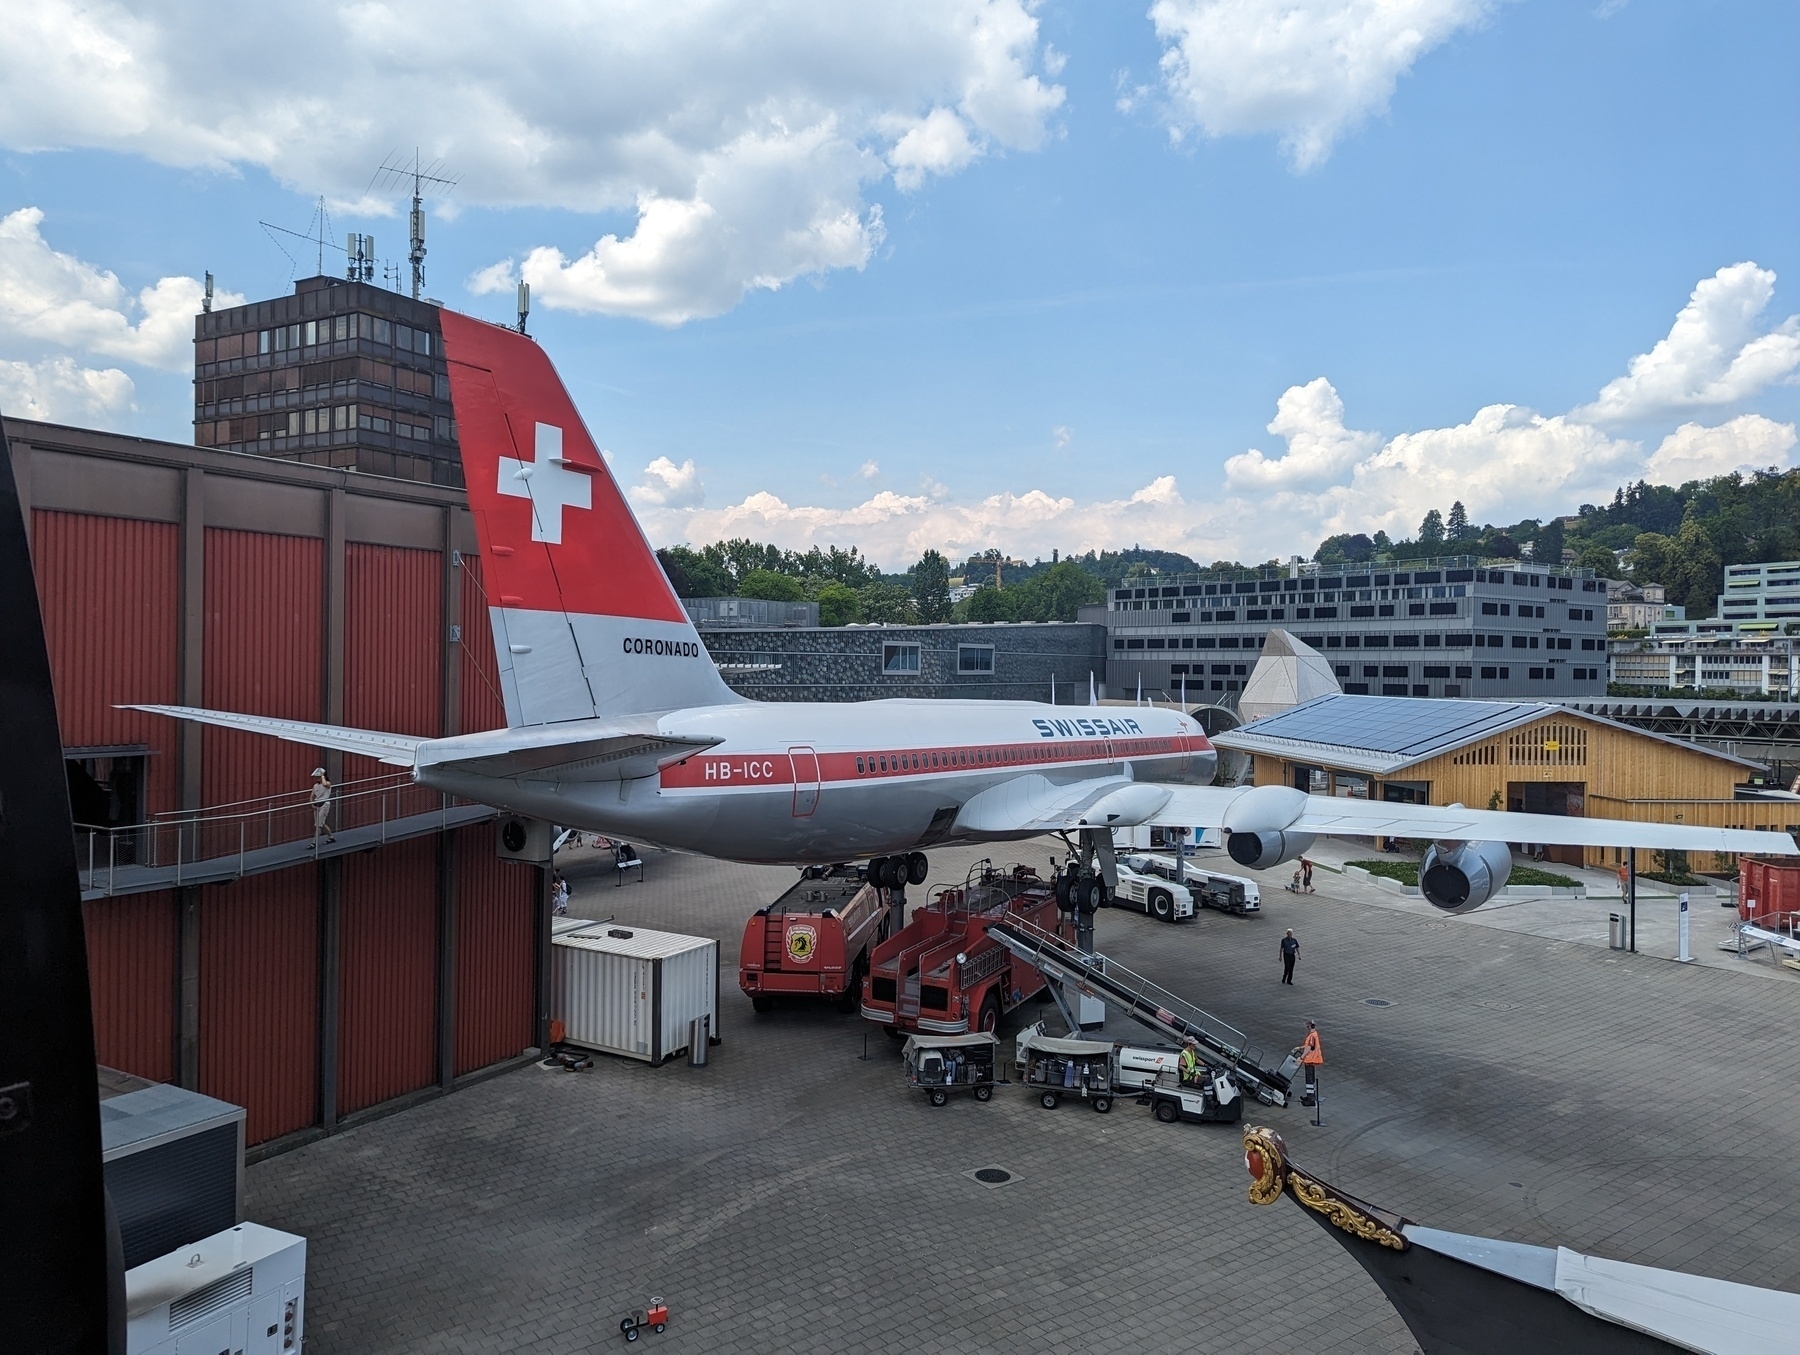 Tail of a Swiss Air aeroplane